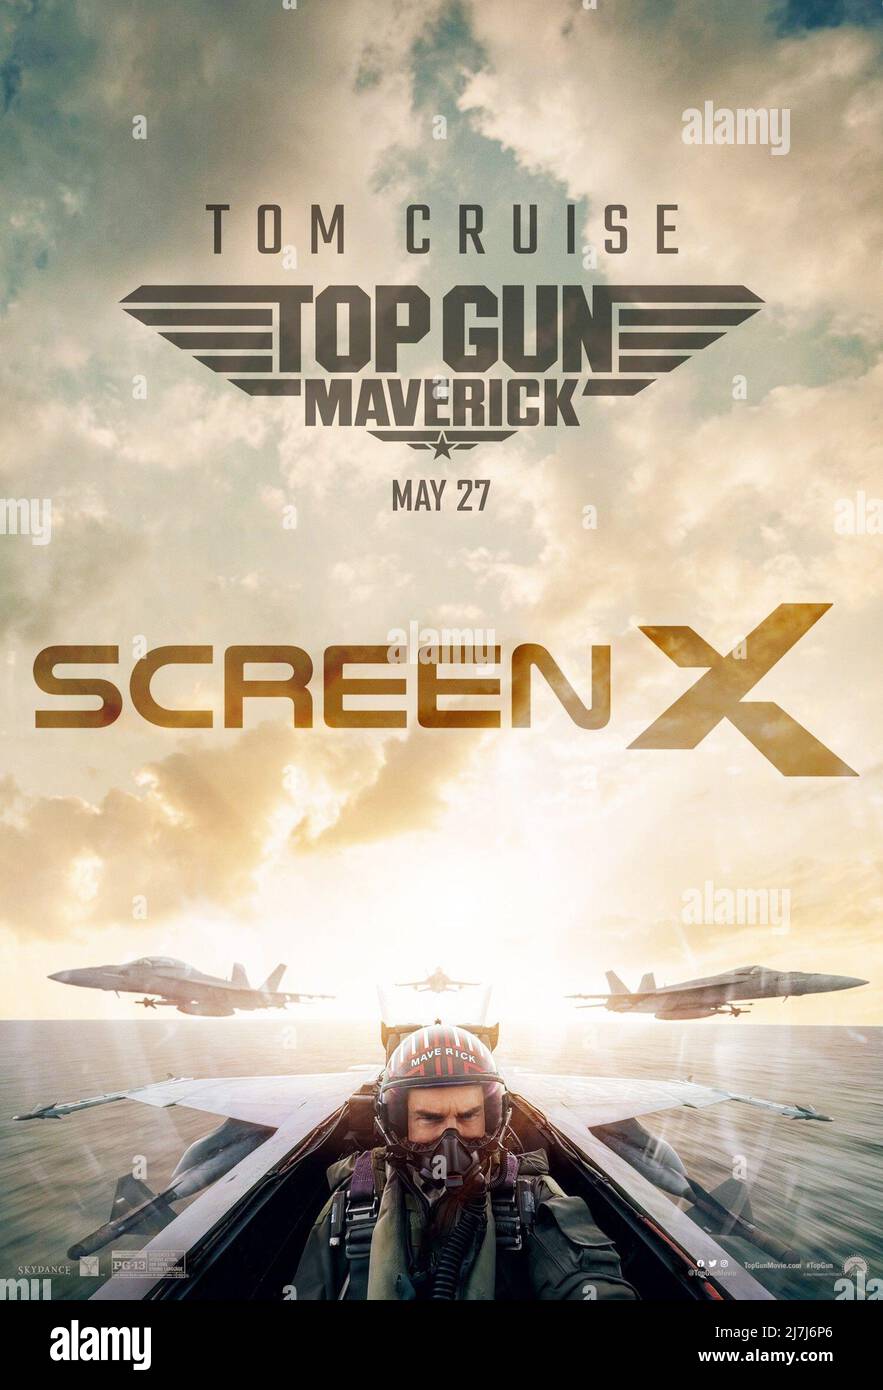 TOP GUN: MAVERICK, (aka TOP GUN 2), US ScreenX poster, Tom Cruise, 2022. ©  Paramount Pictures / Courtesy Everett Collection Stock Photo - Alamy